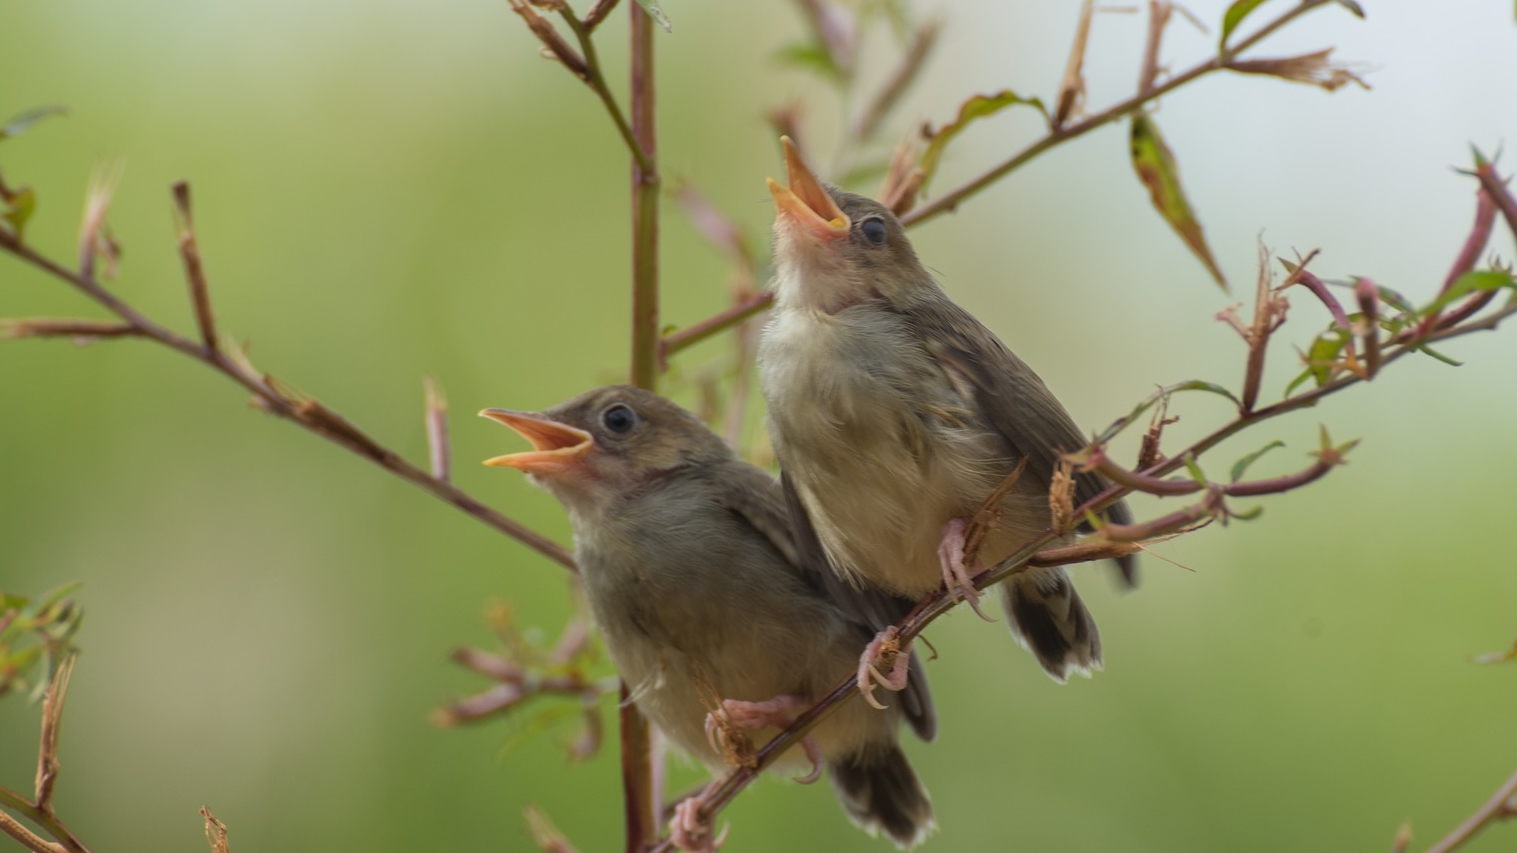 Songbirds singing